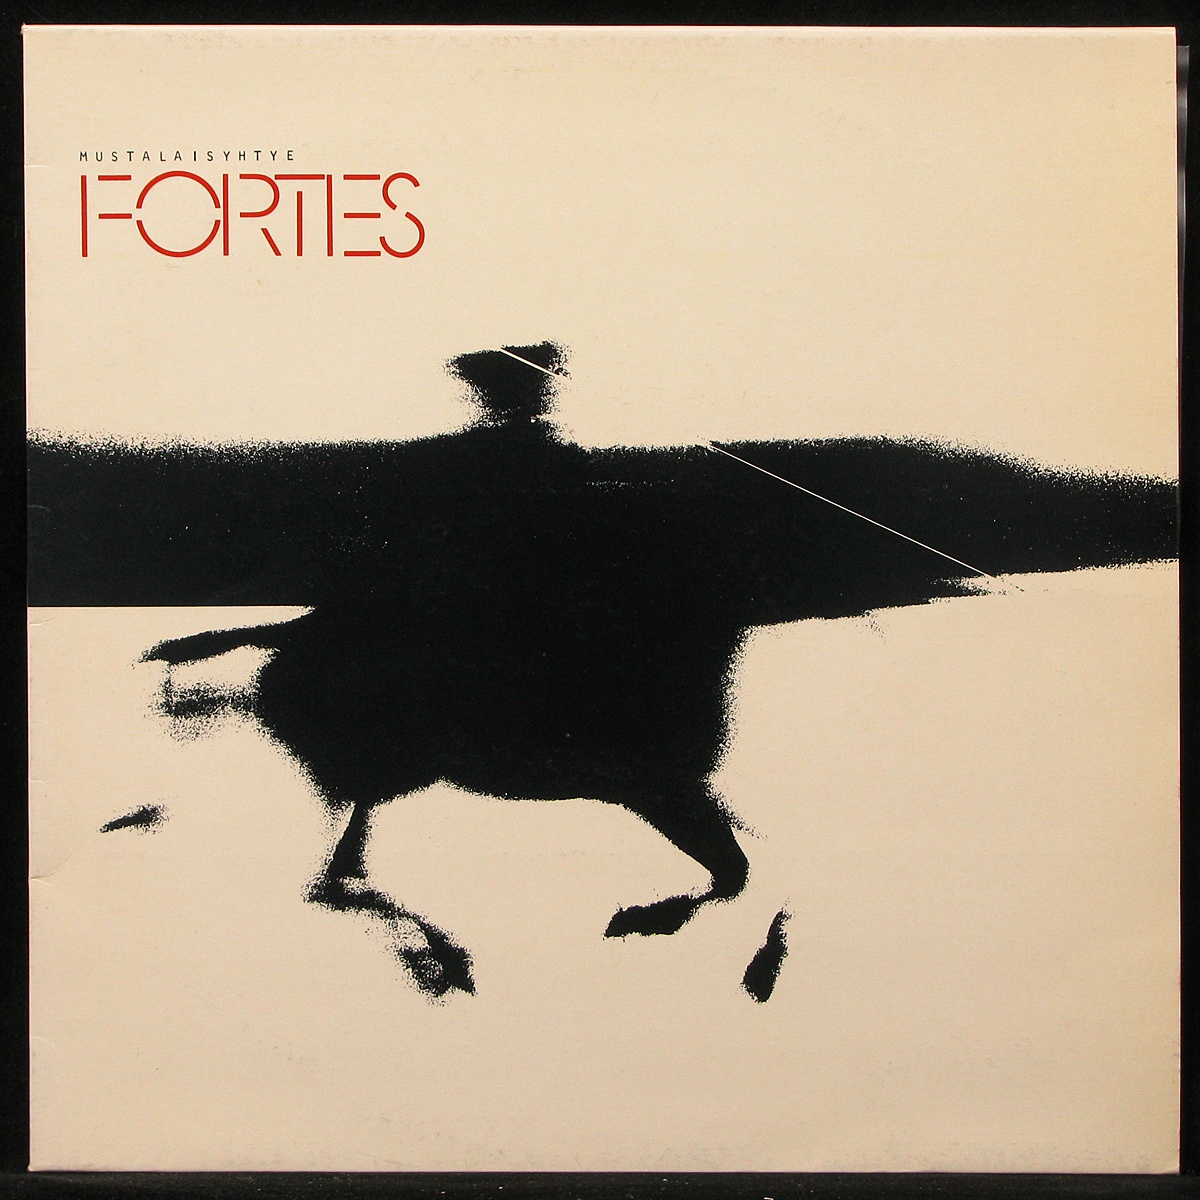 LP Mustalaisyhtye Fortes — Mustalaisyhtye Fortes (export press) фото